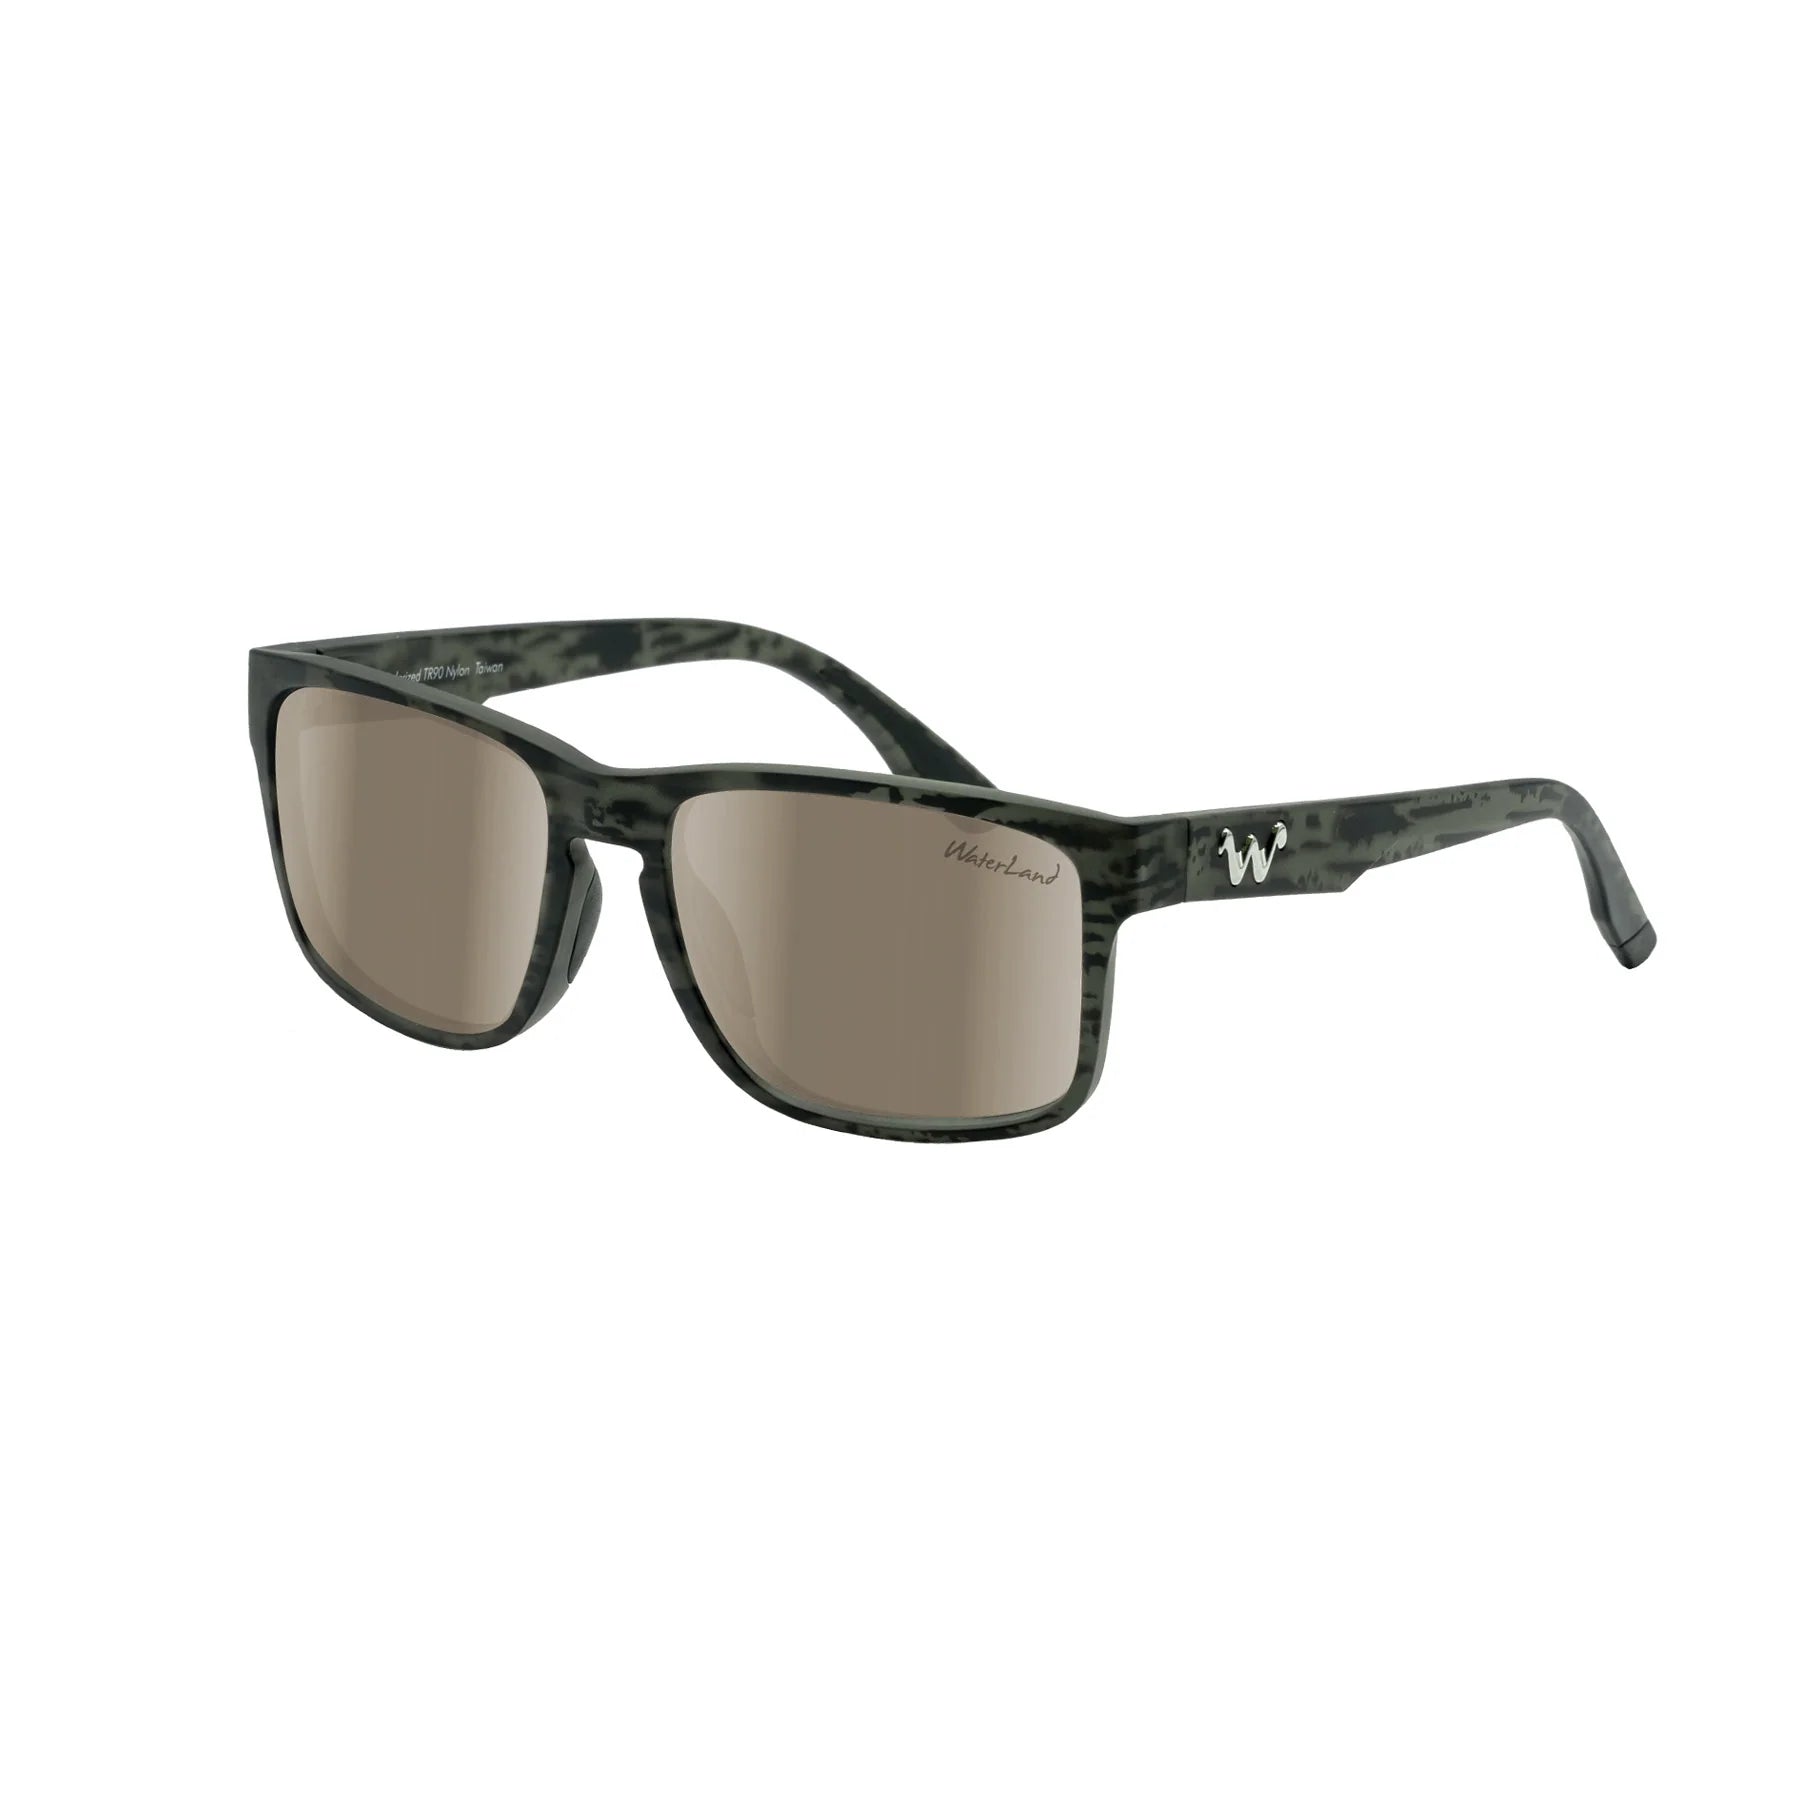 Waterland Sobro Sunglasses